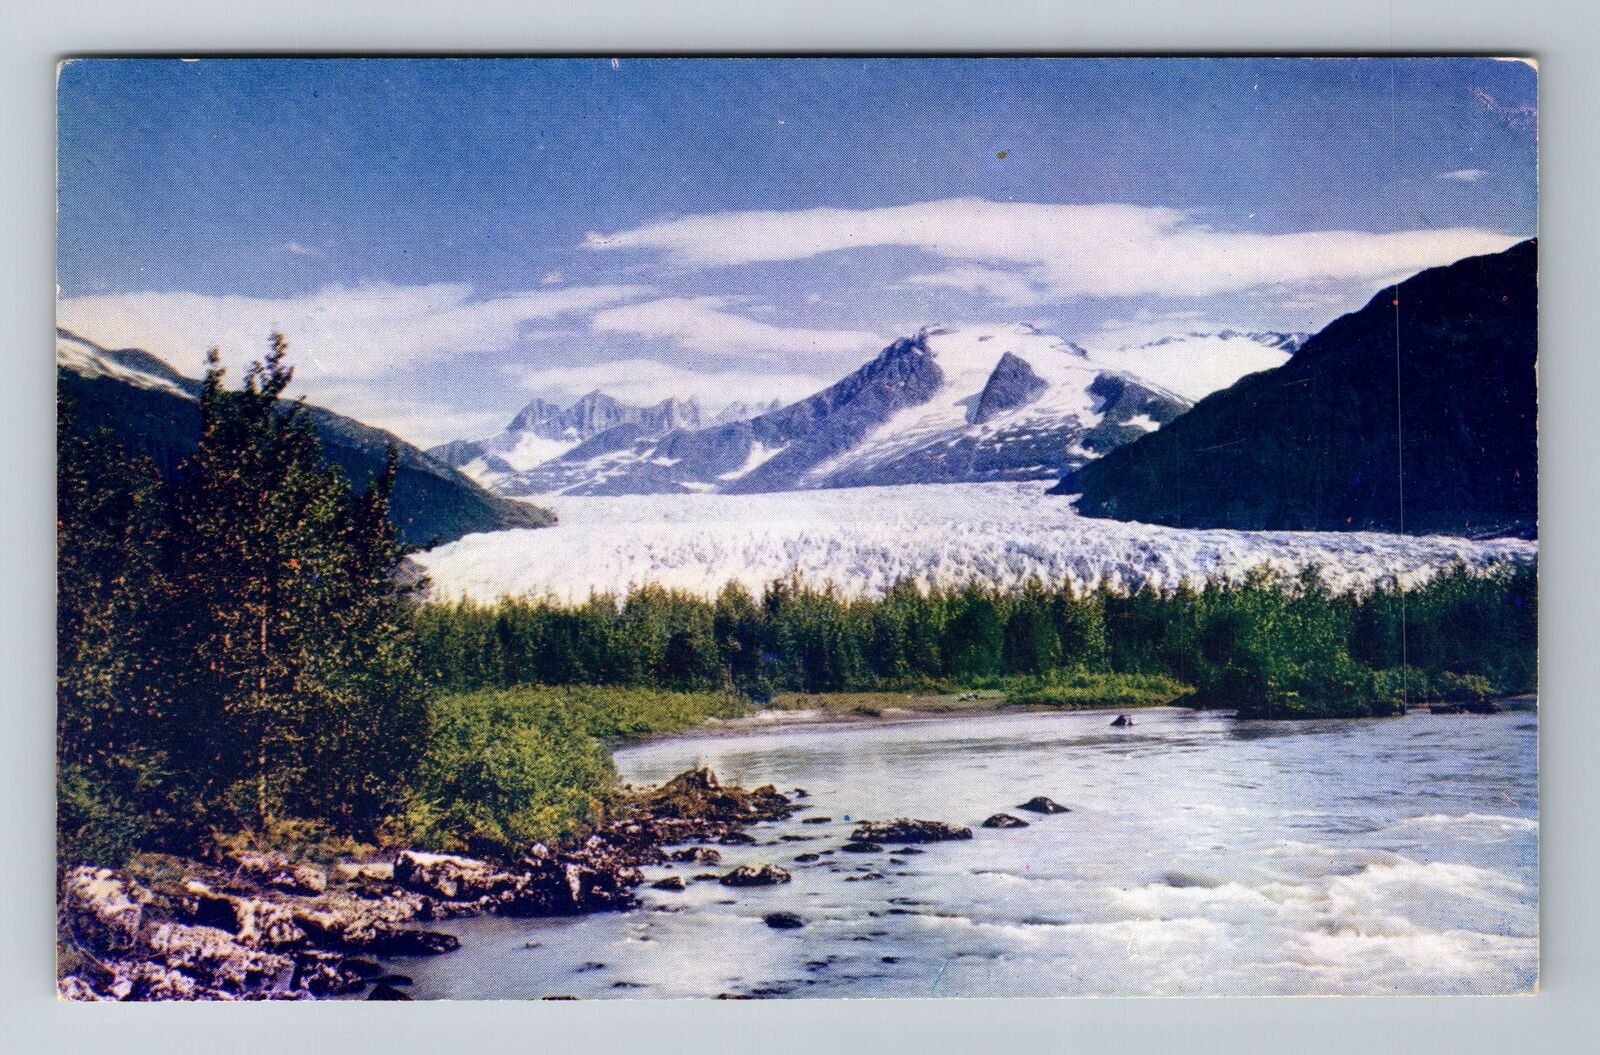 Juneau, AK-Alaska, Mendenhall Glacier Antique, Vintage Souvenir Postcard